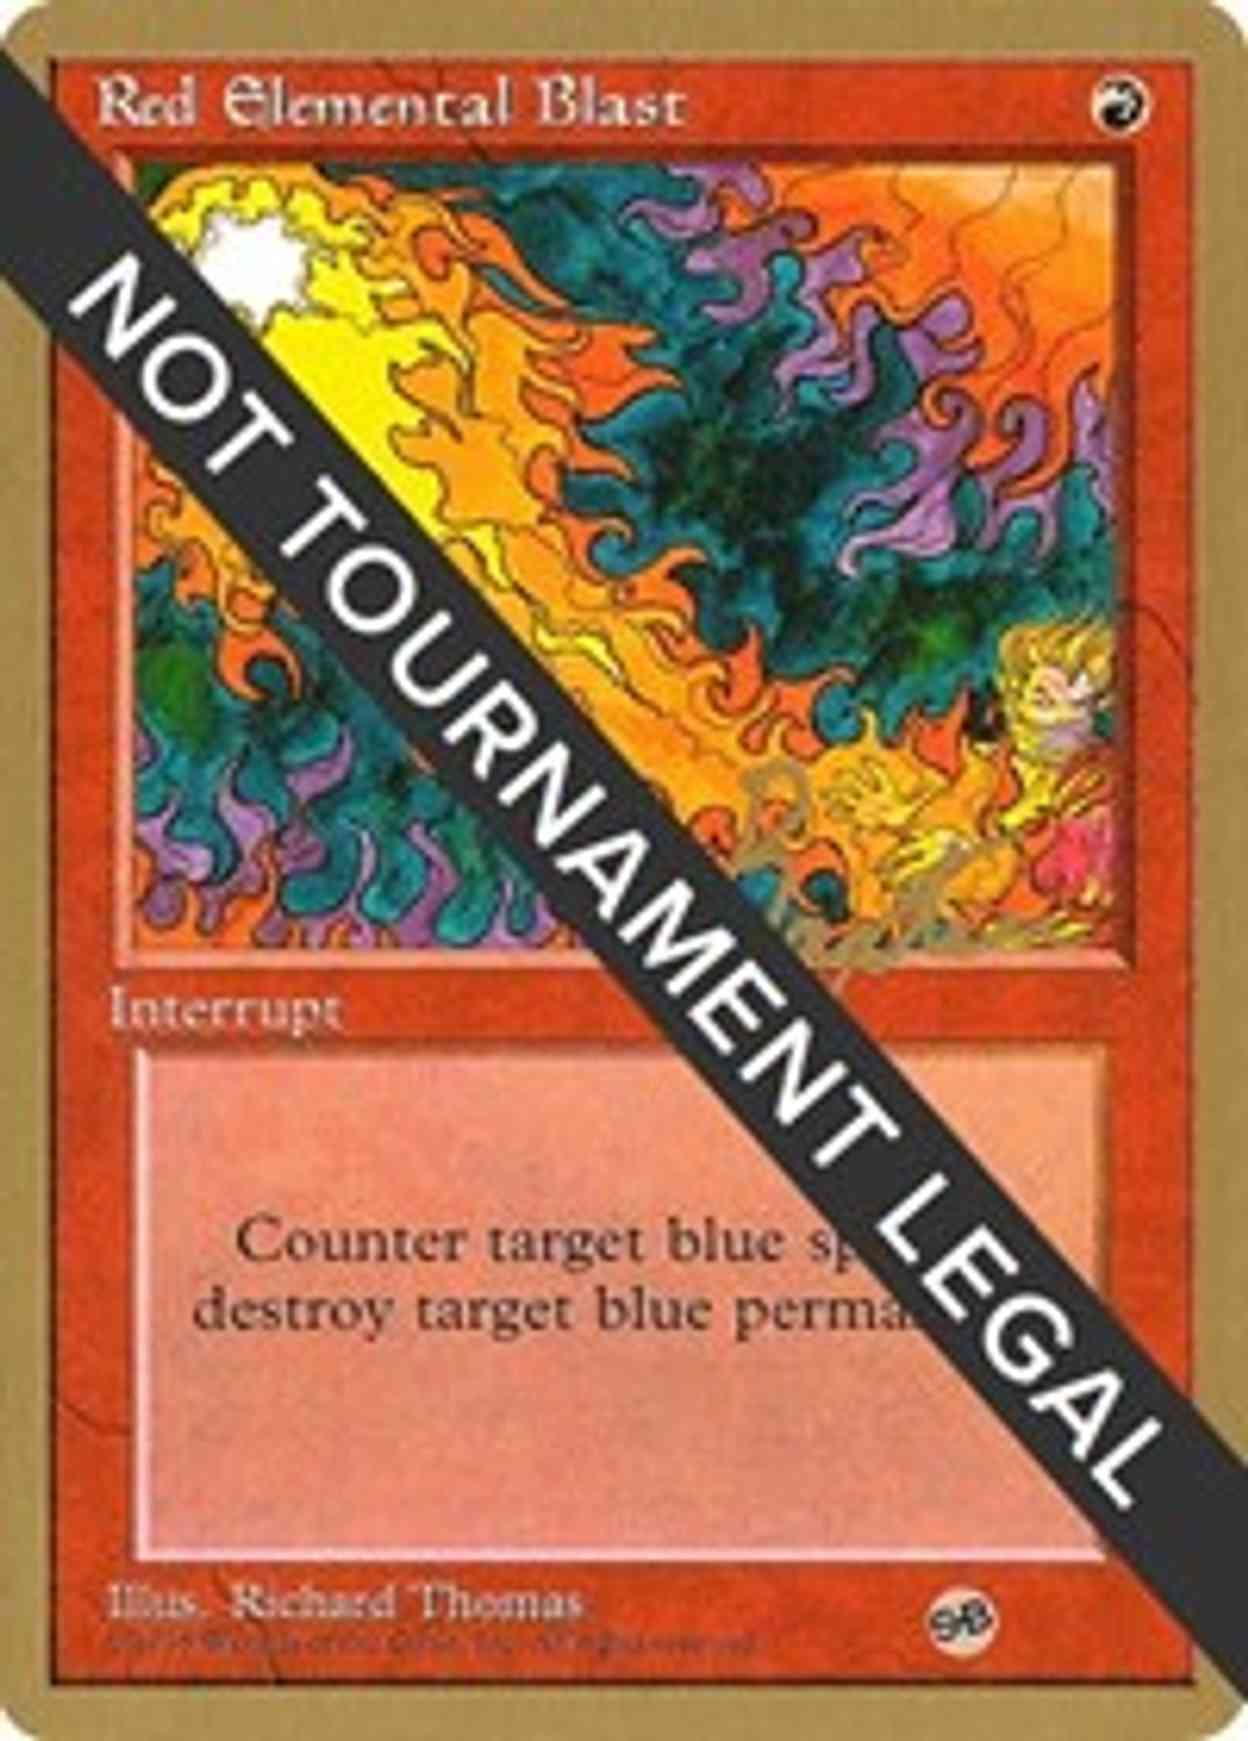 Red Elemental Blast - 1996 George Baxter (4ED) (SB) magic card front